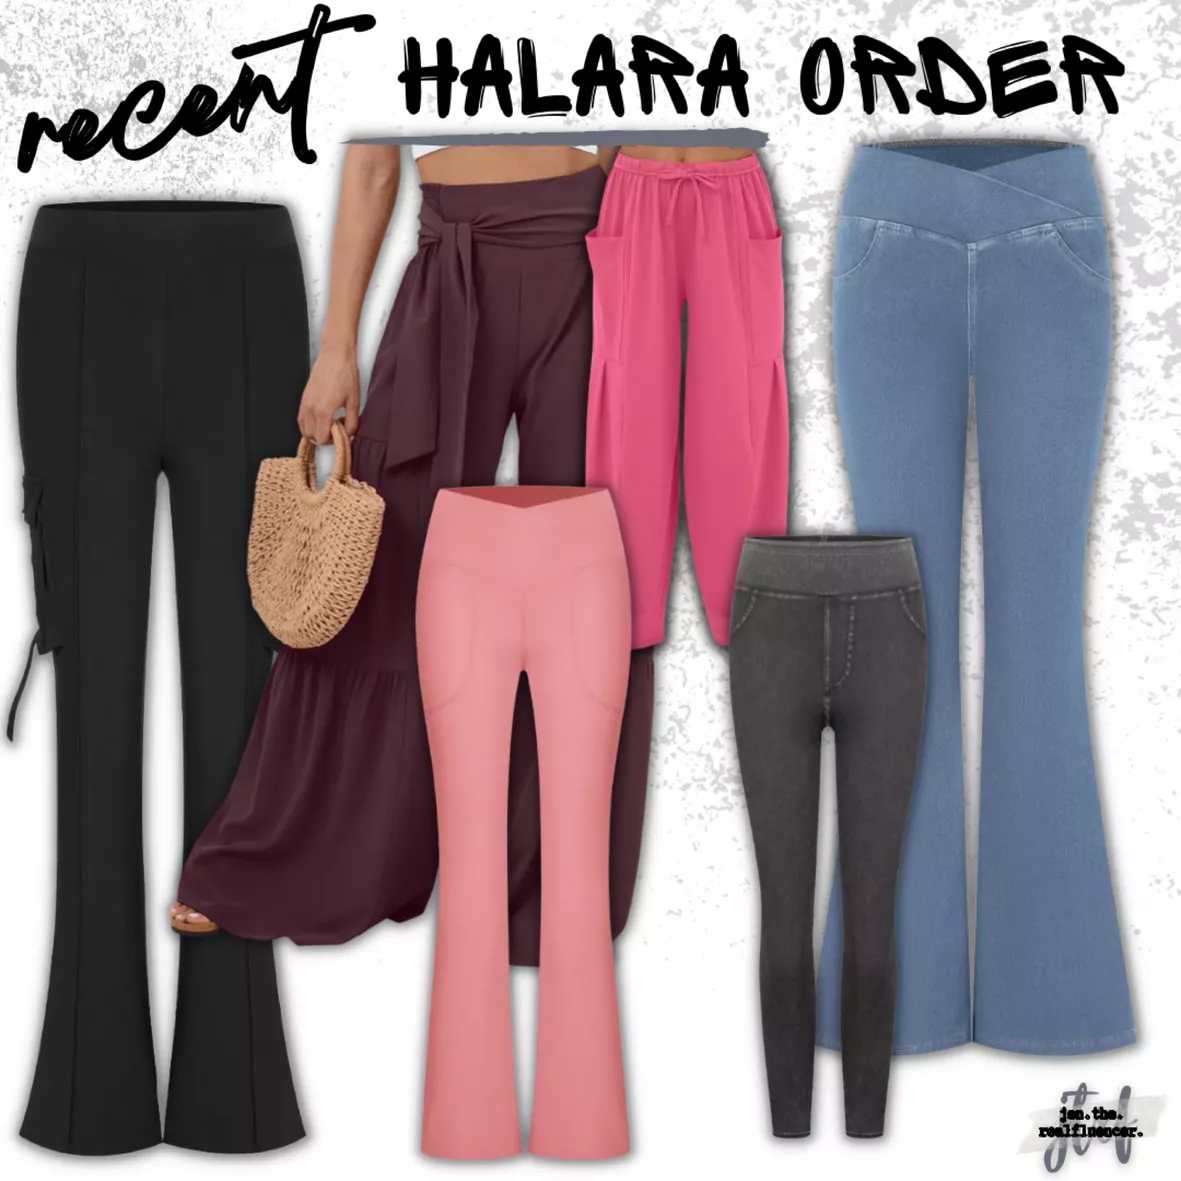 JenTheRealfluencer's Halara Collection on LTK